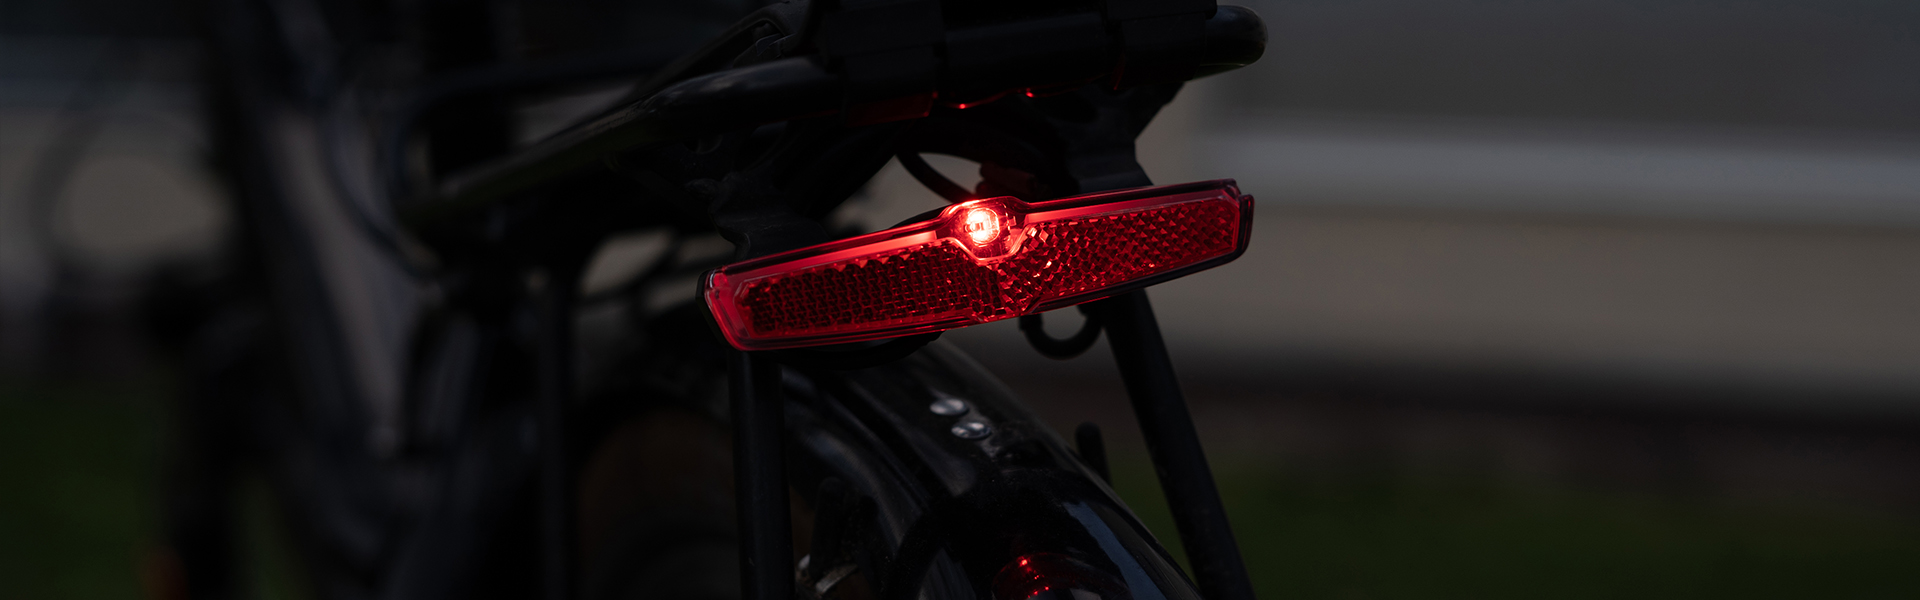 Sate-lite OSRAM 100lux ebike light CE Rohs  eletric bike headlight  12-58V